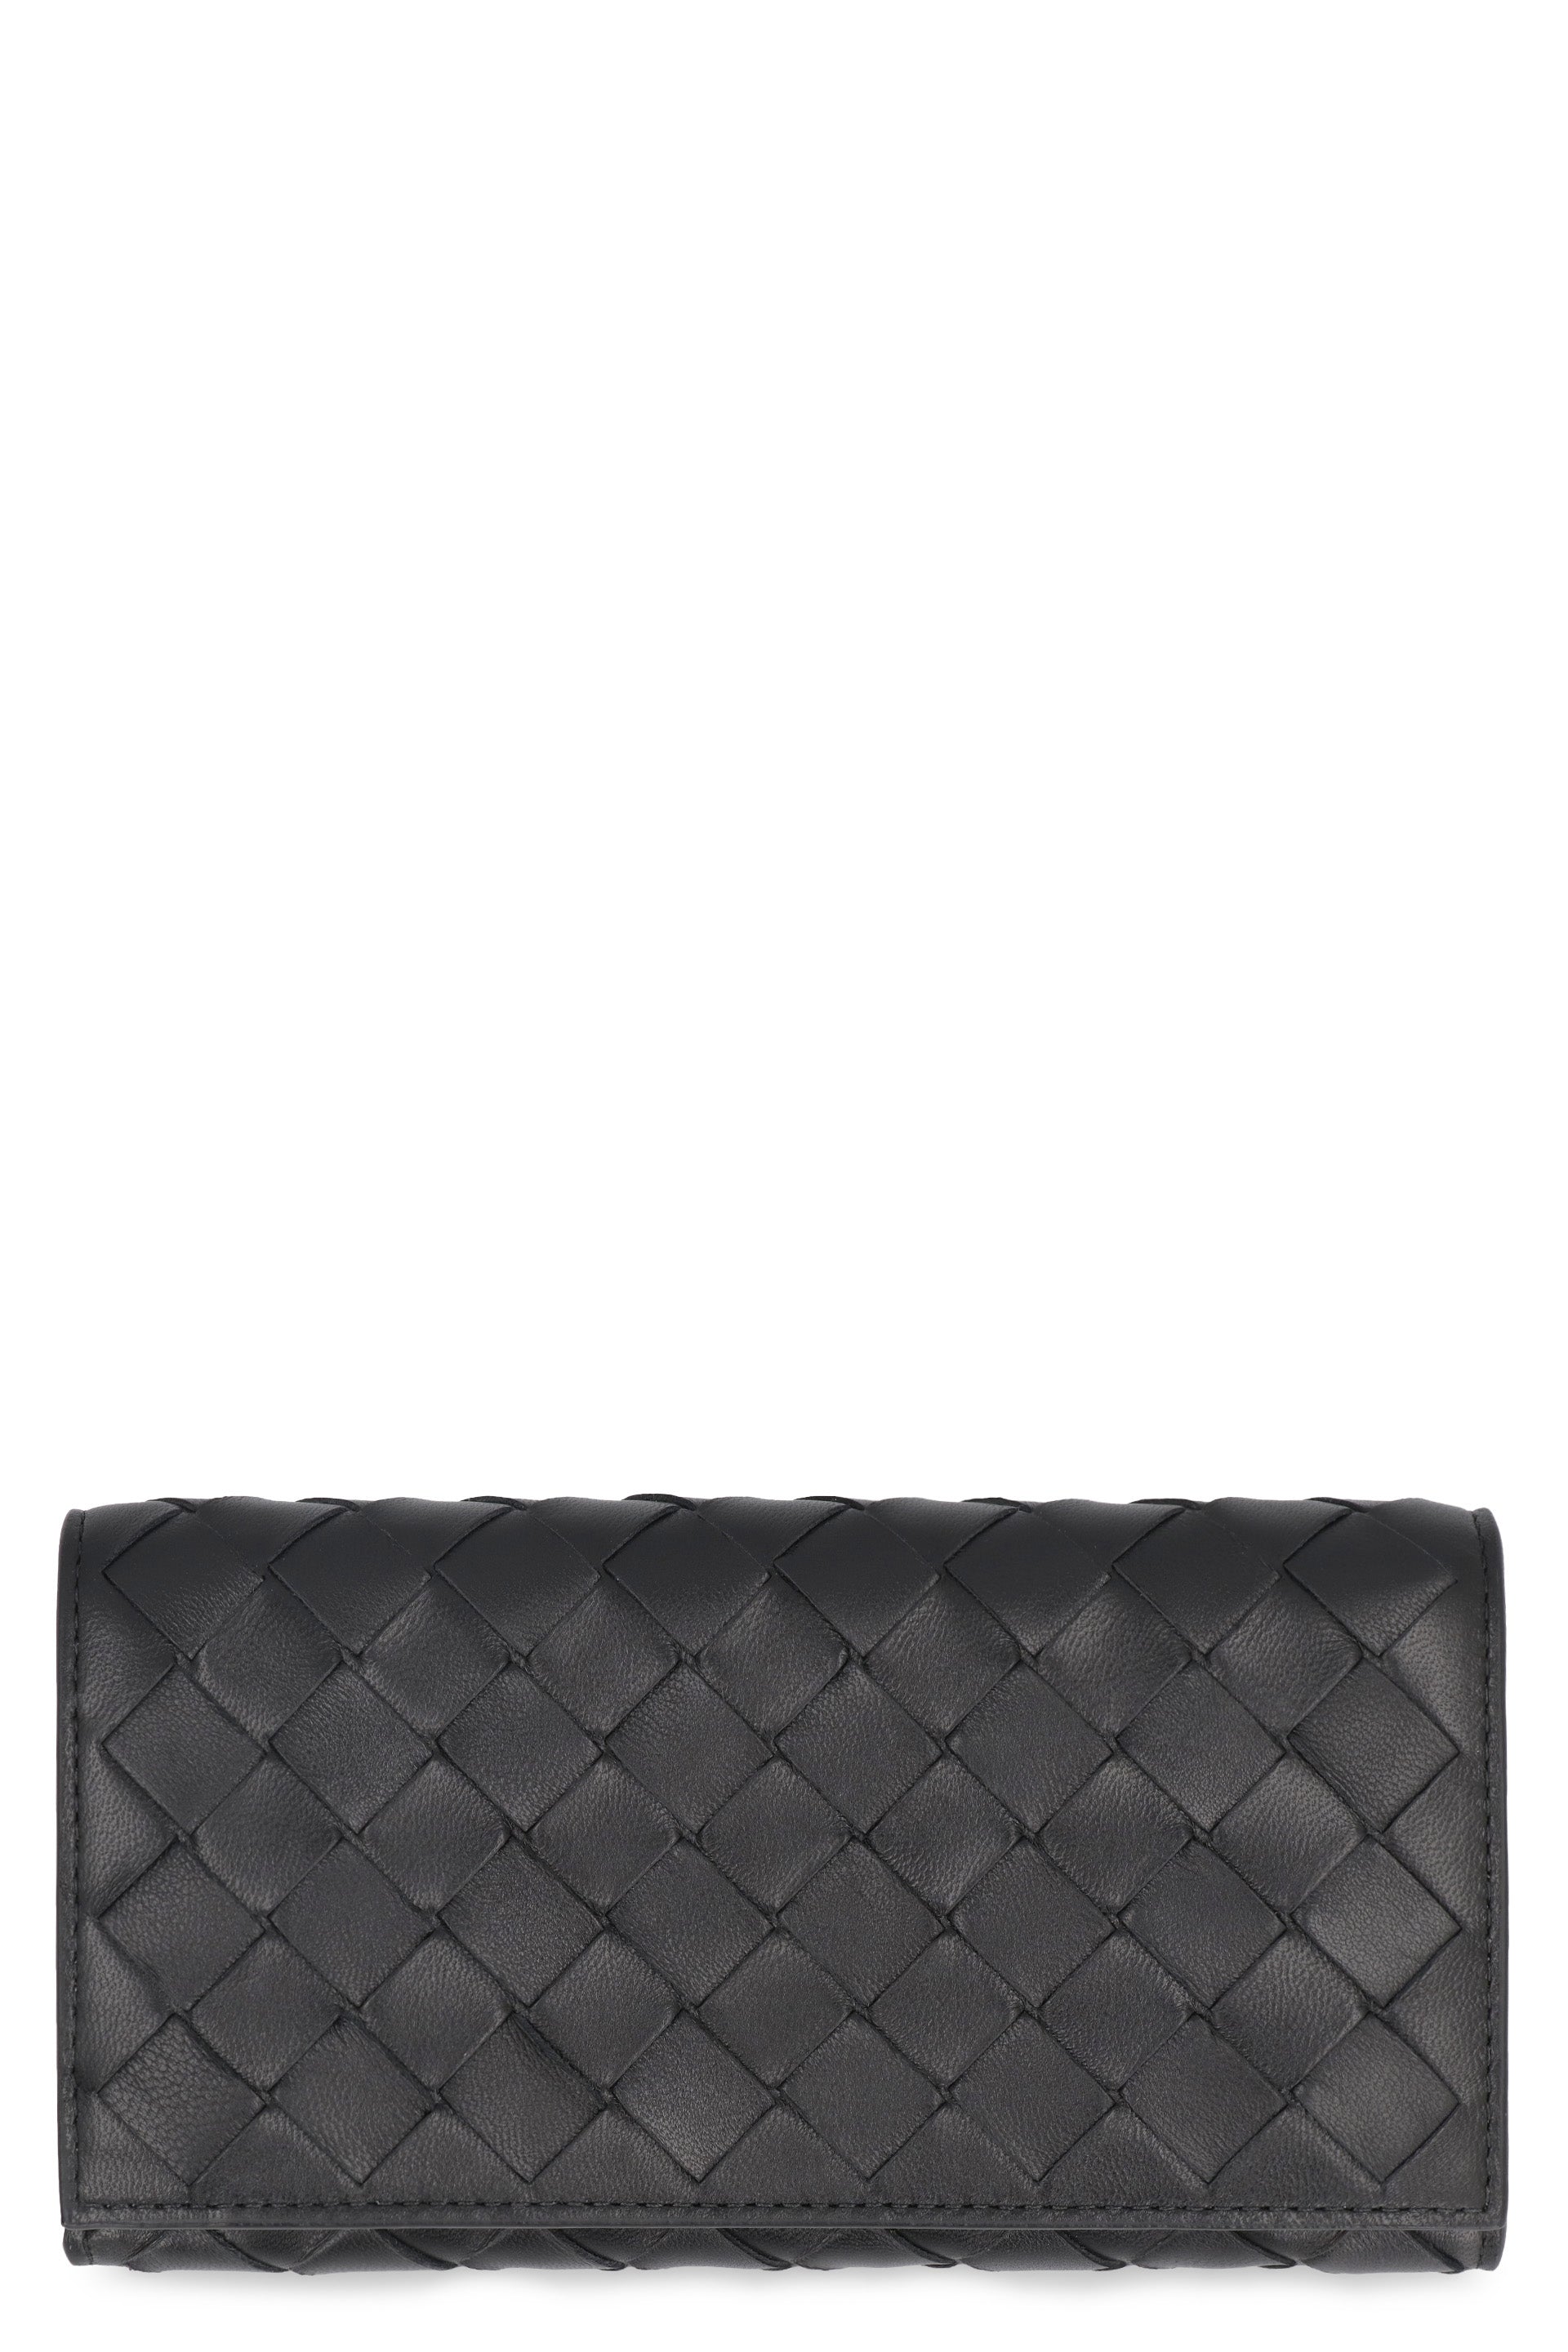 Shop Bottega Veneta Black Nappa Leather Wallet For Women